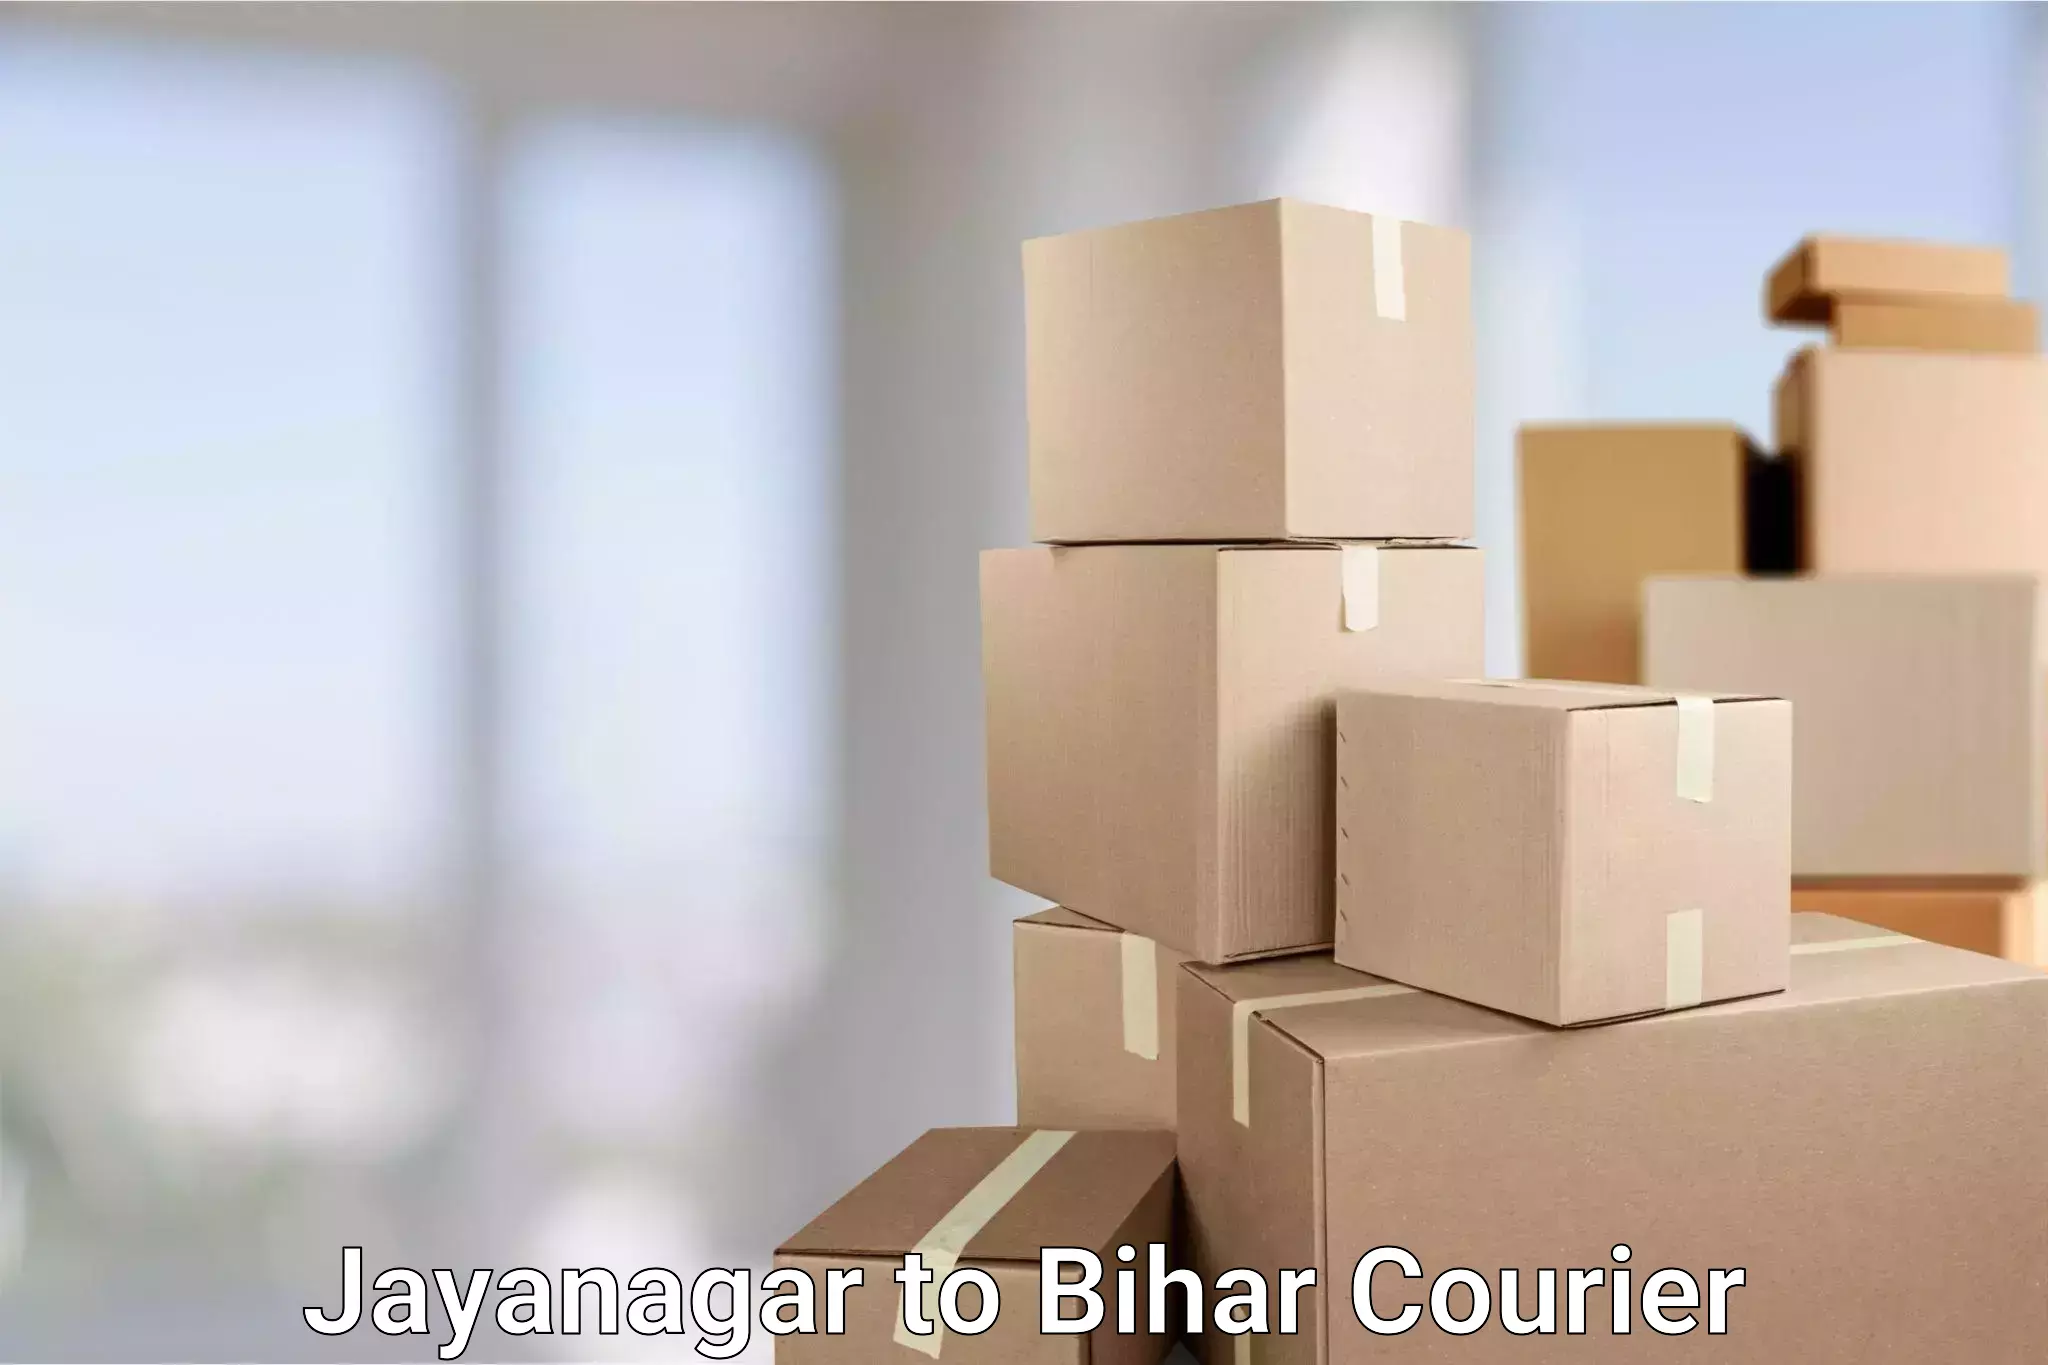 Global courier networks Jayanagar to Bihar